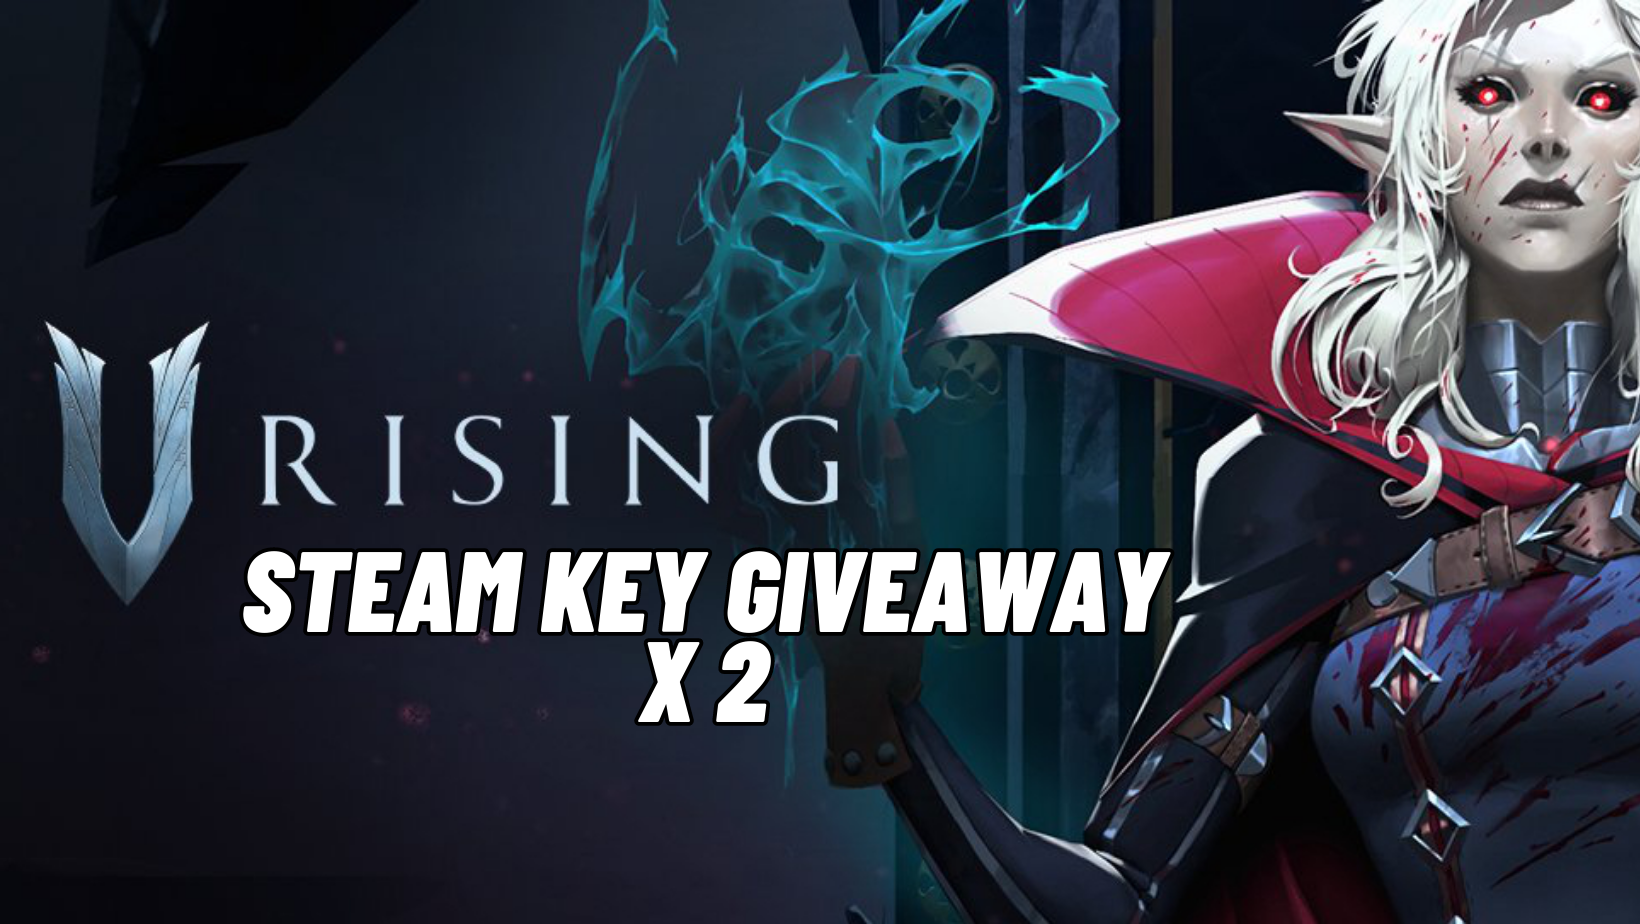 Giveaway: V Rising Steam Key x 2